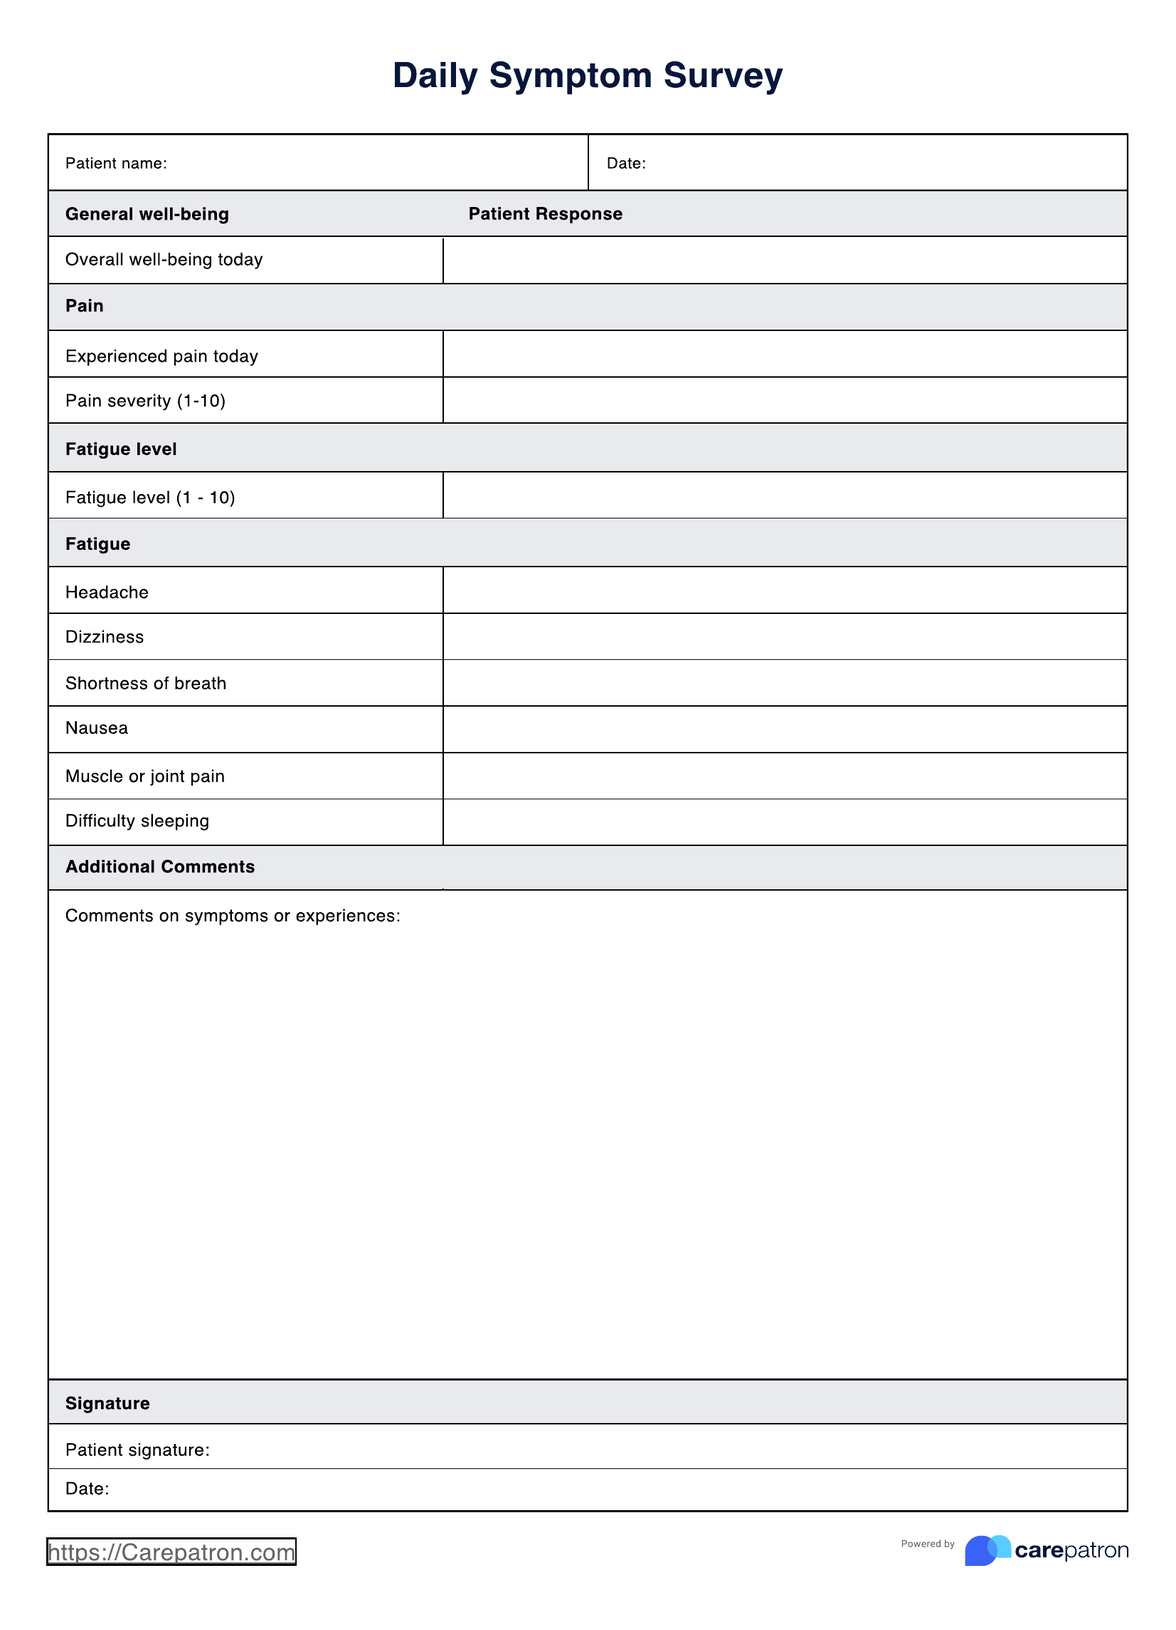 Daily Symptom Survey PDF Example